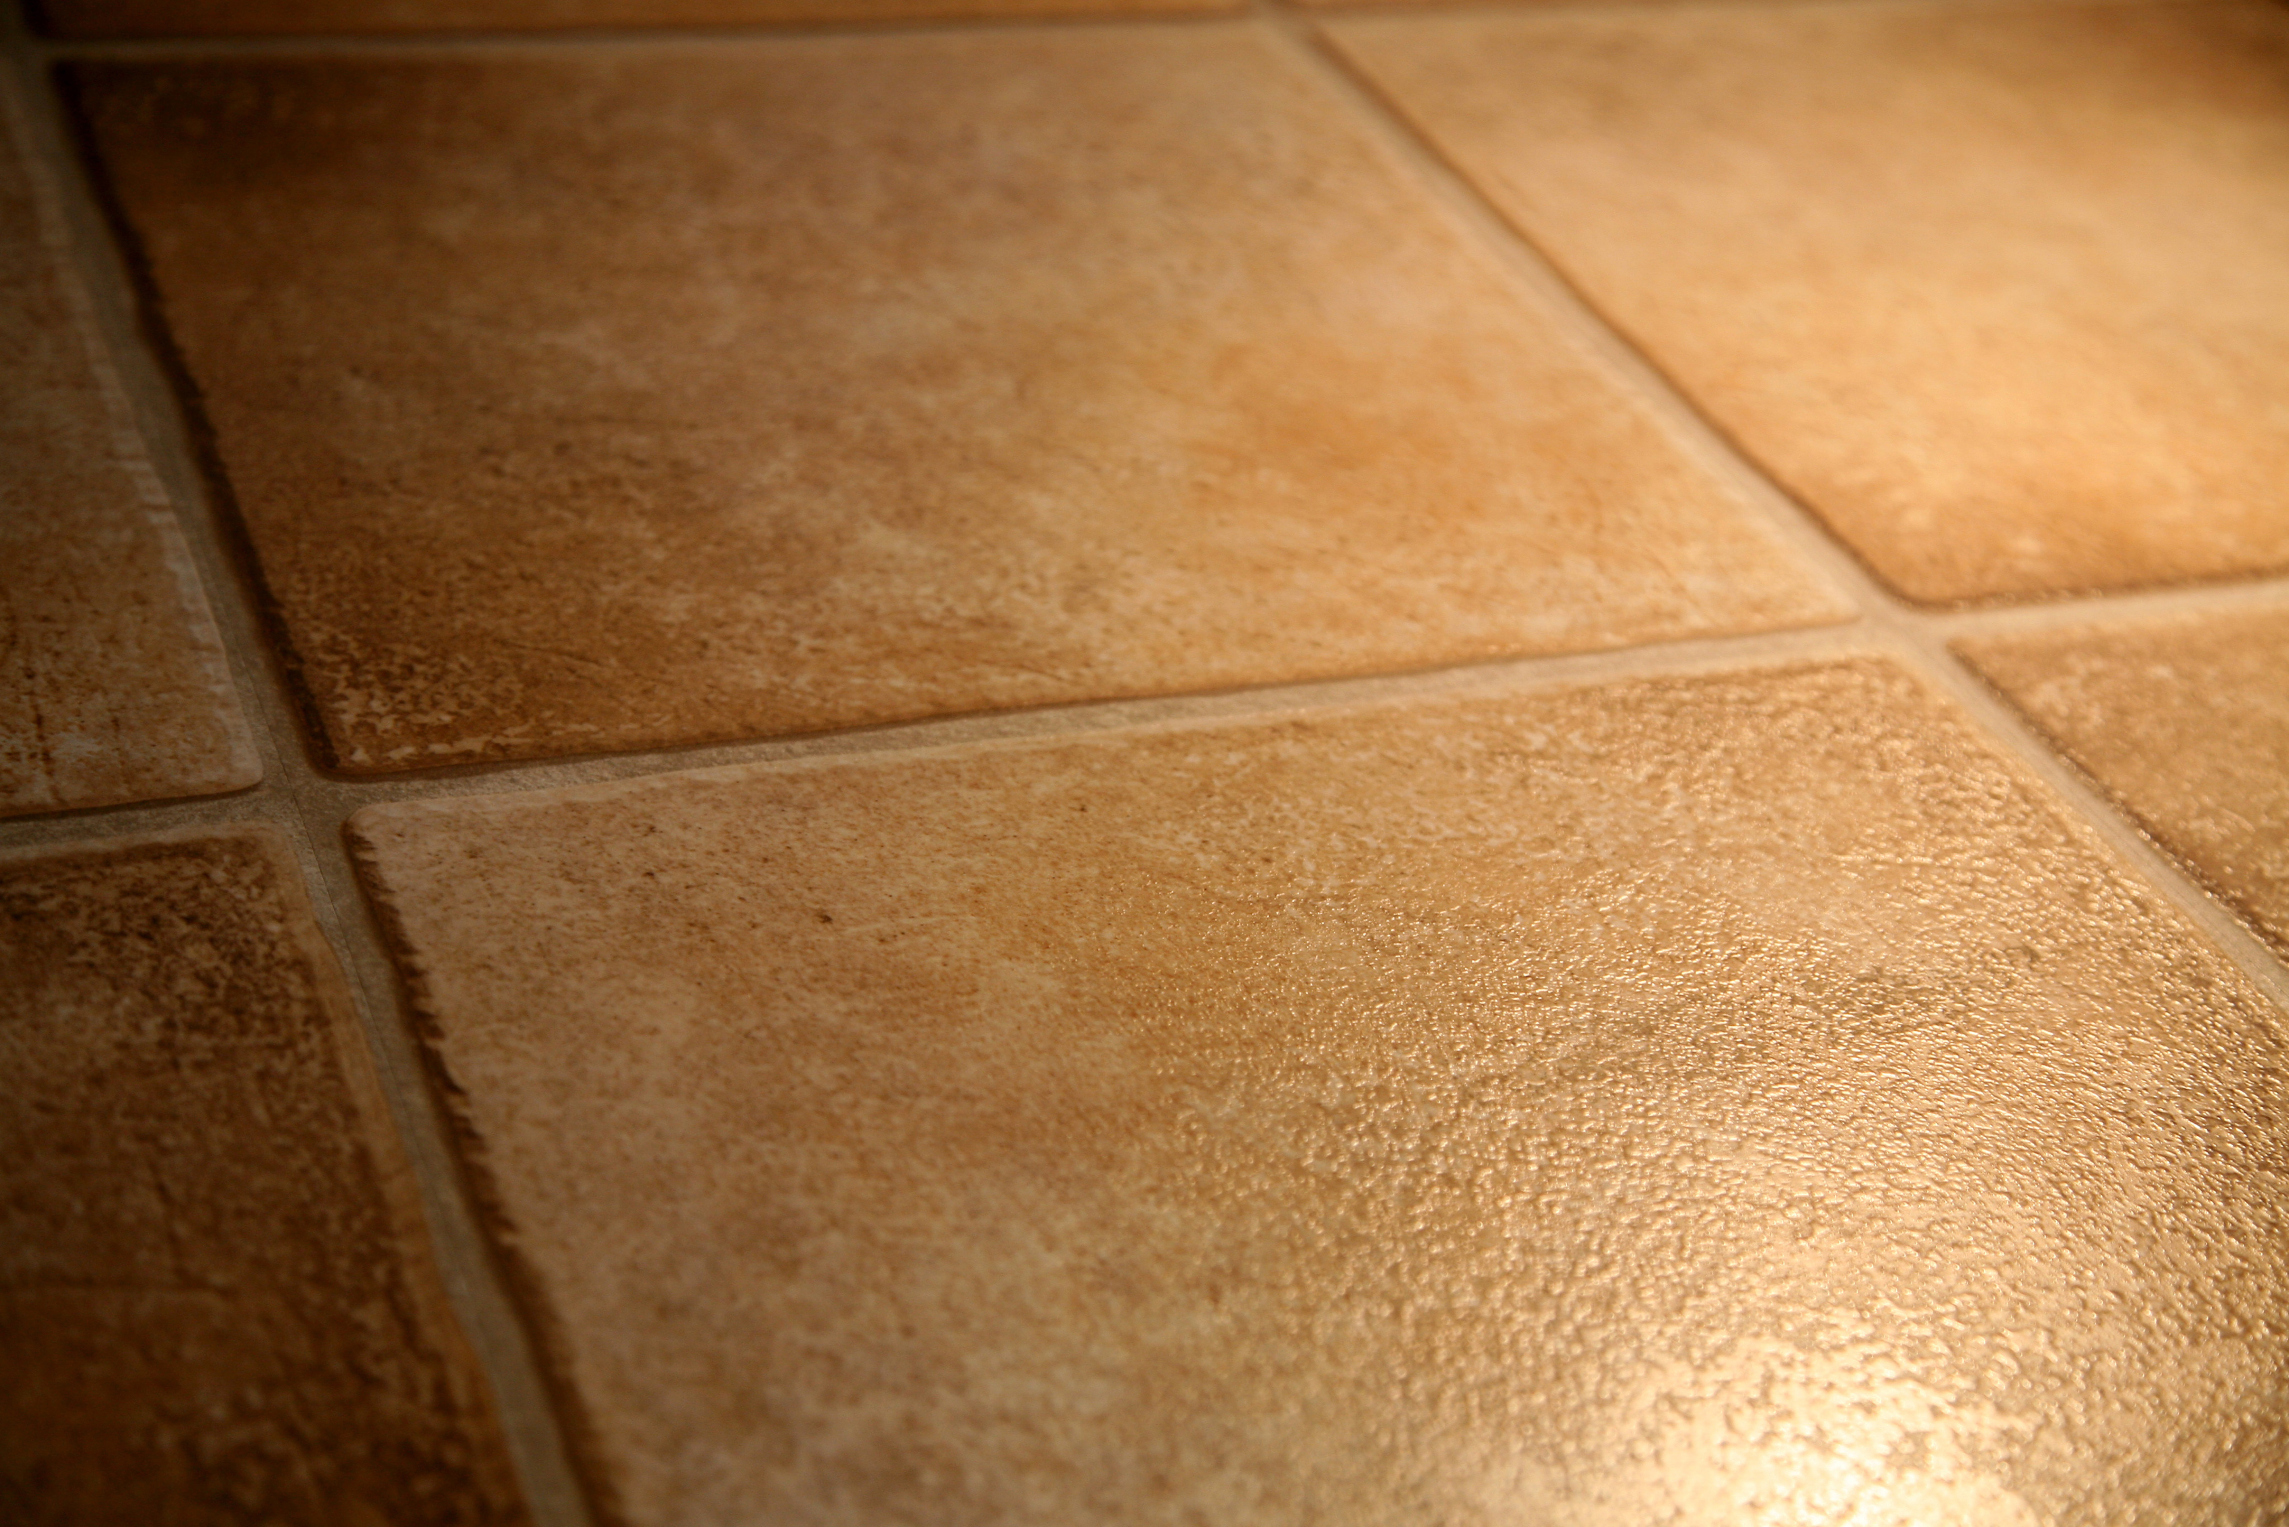 Can You Resurface Tile Floors? Floor Tile Resurfacing Tips